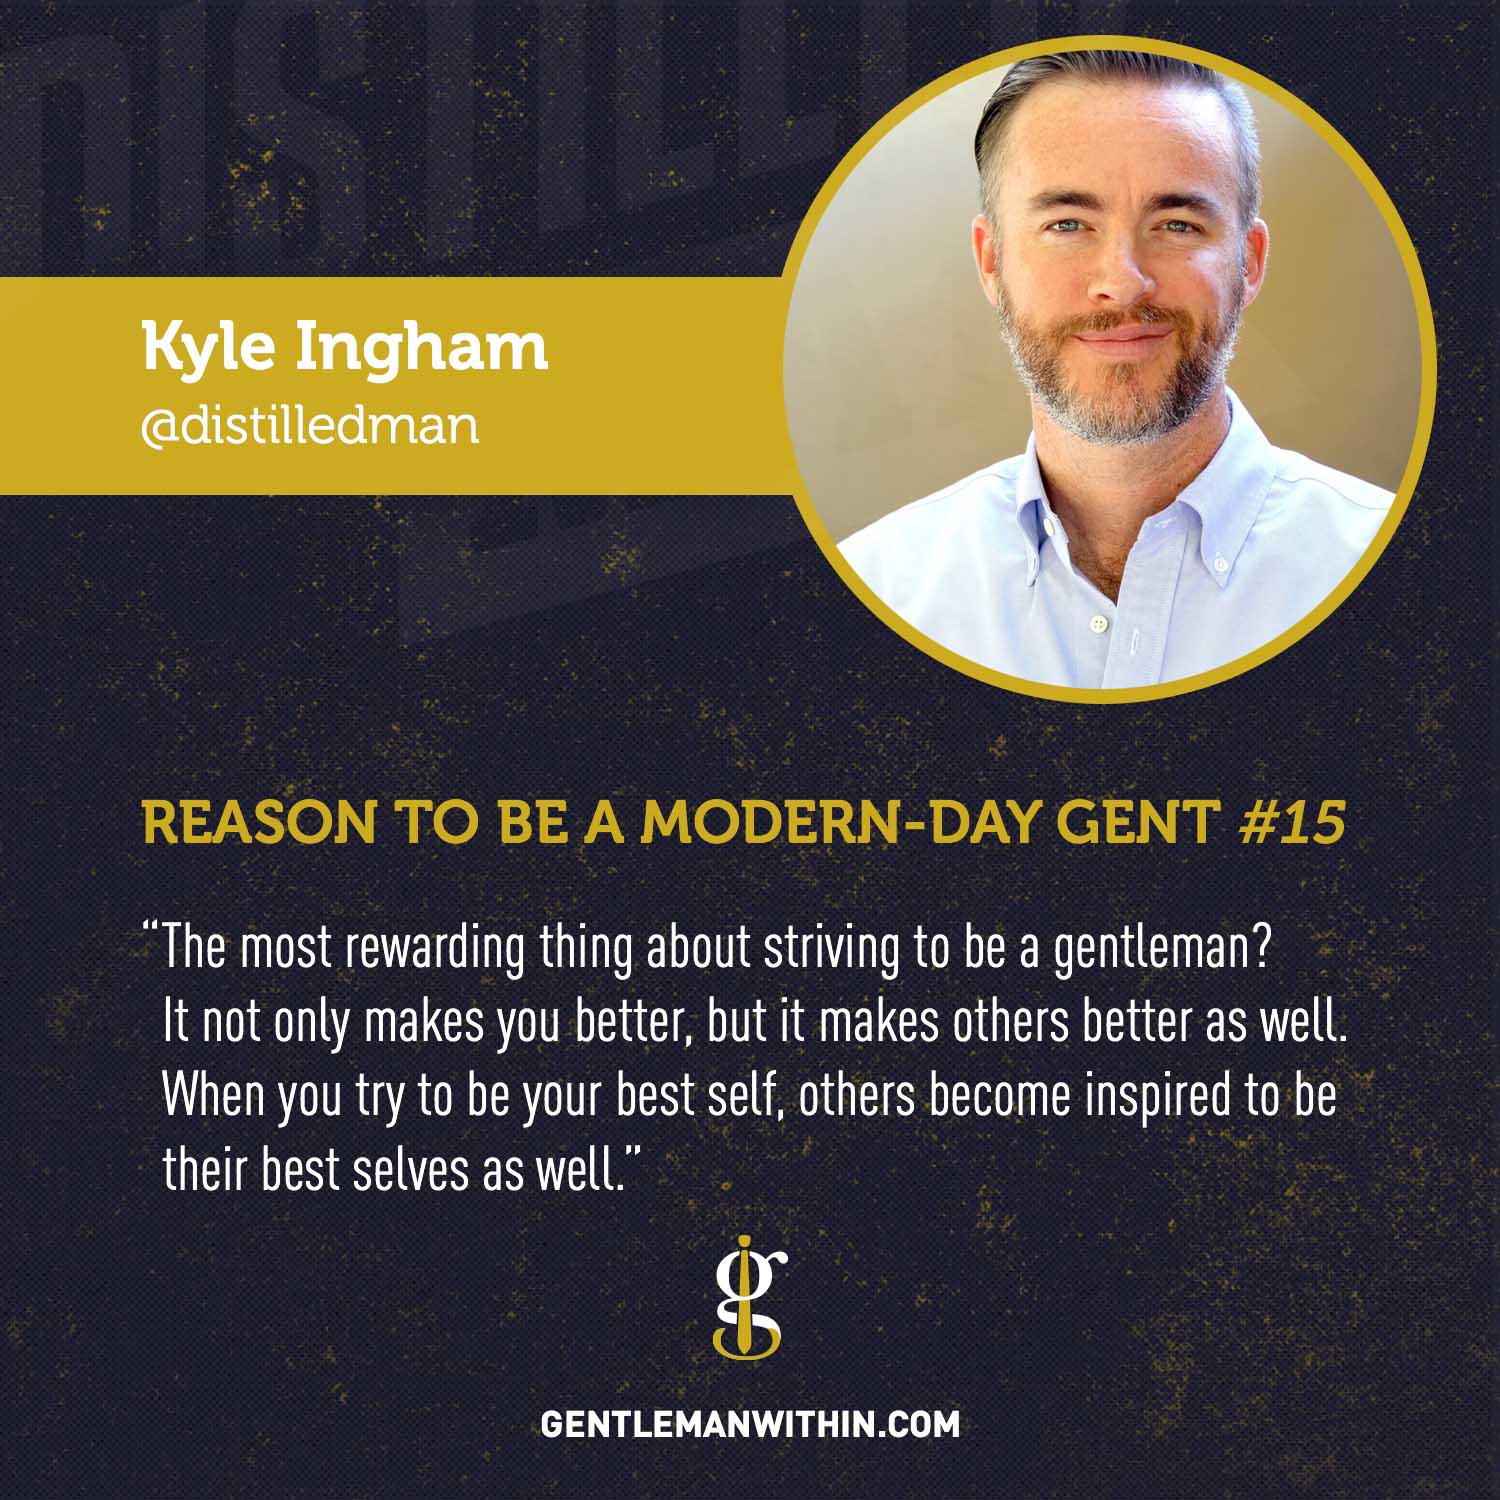 Kyle Ingham Reason To Be A Modern-Day Gentleman